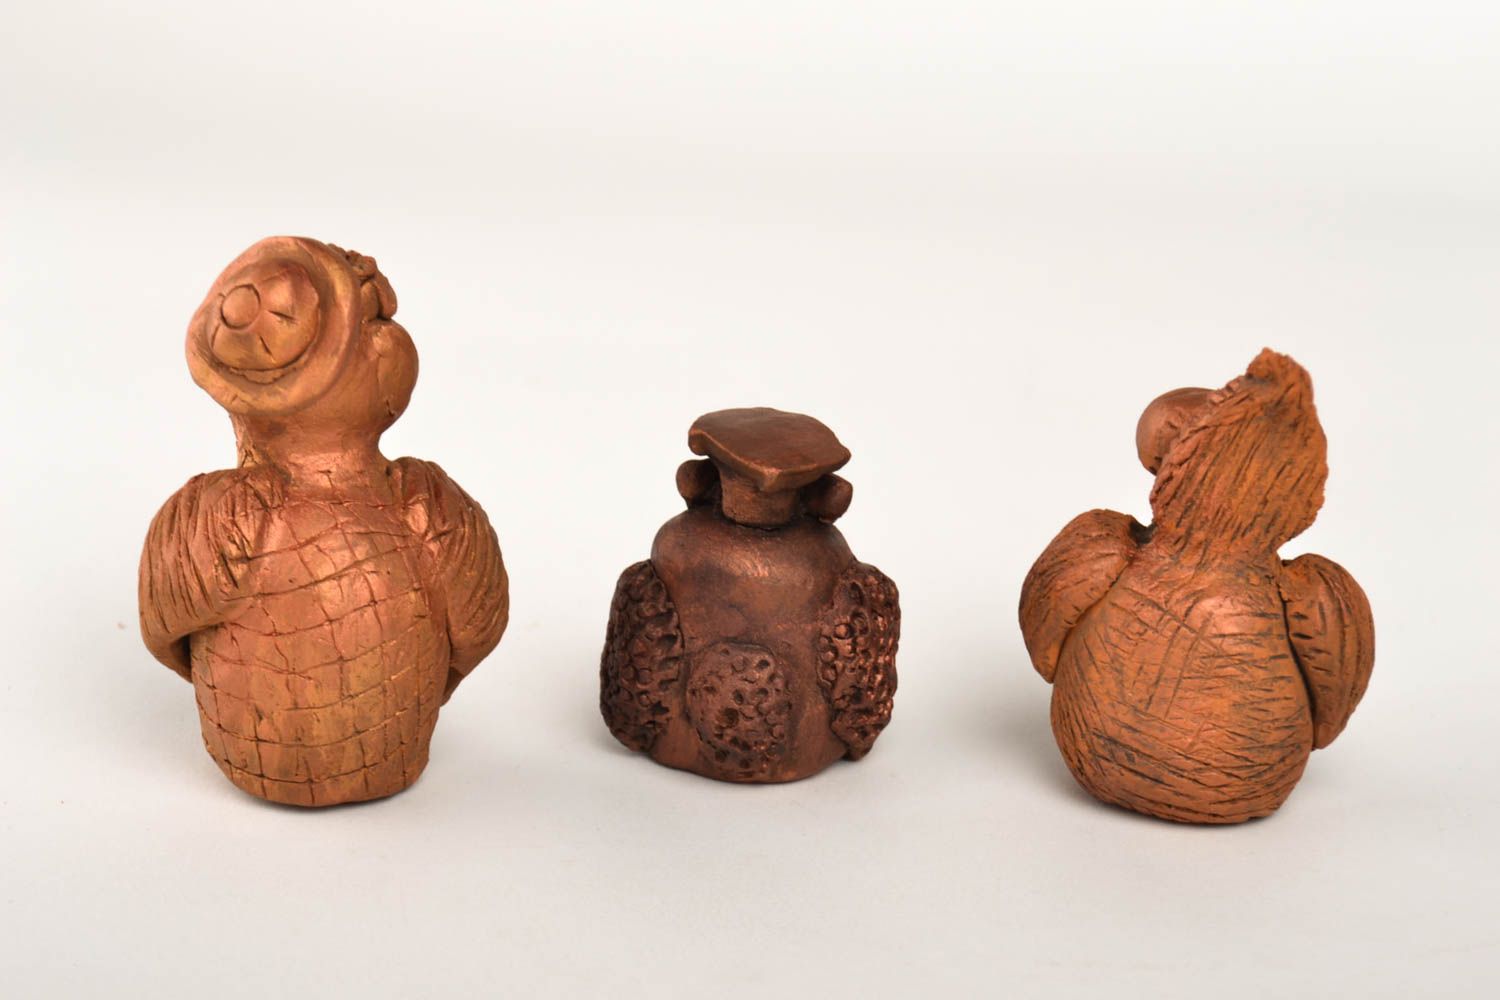 Handmade figurine set of 3 items clay figurine gift ideas decorative use only photo 2